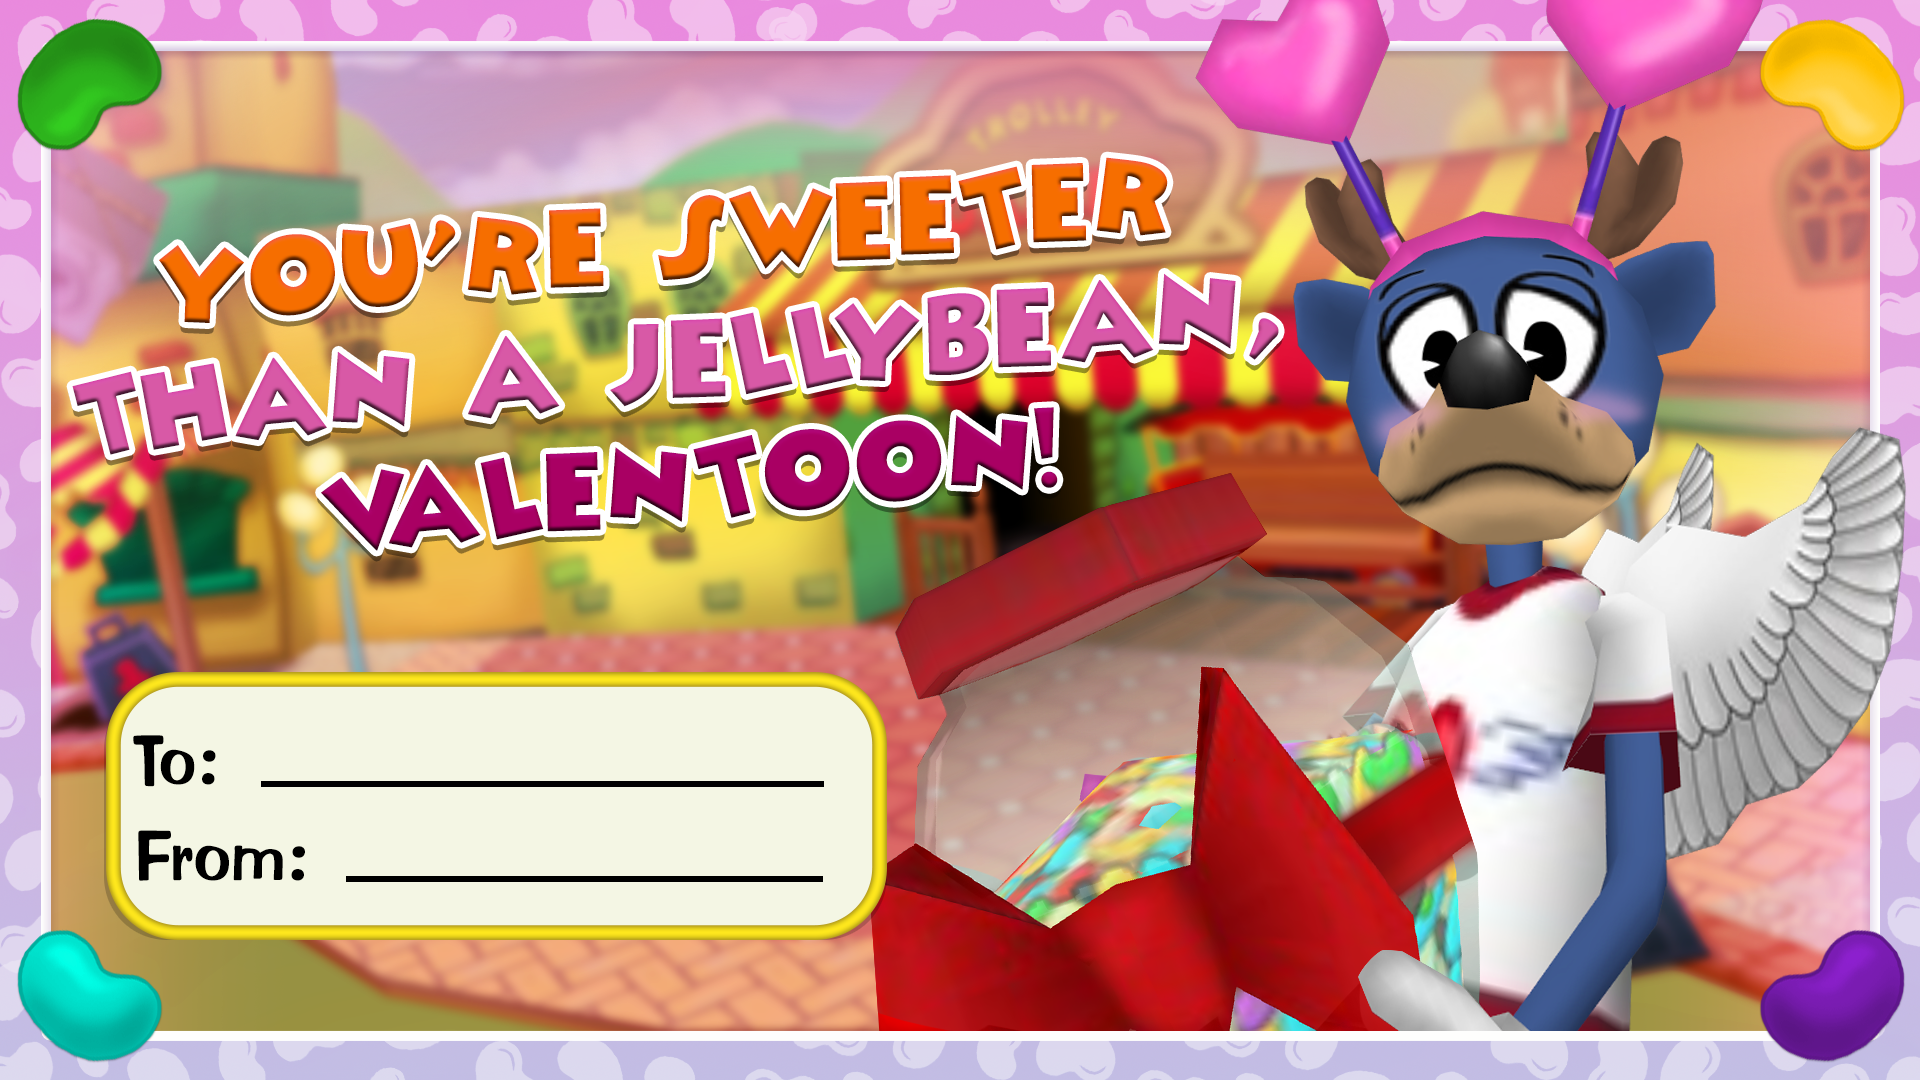 You're Sweeter Than a Jellybean, ValenToon!